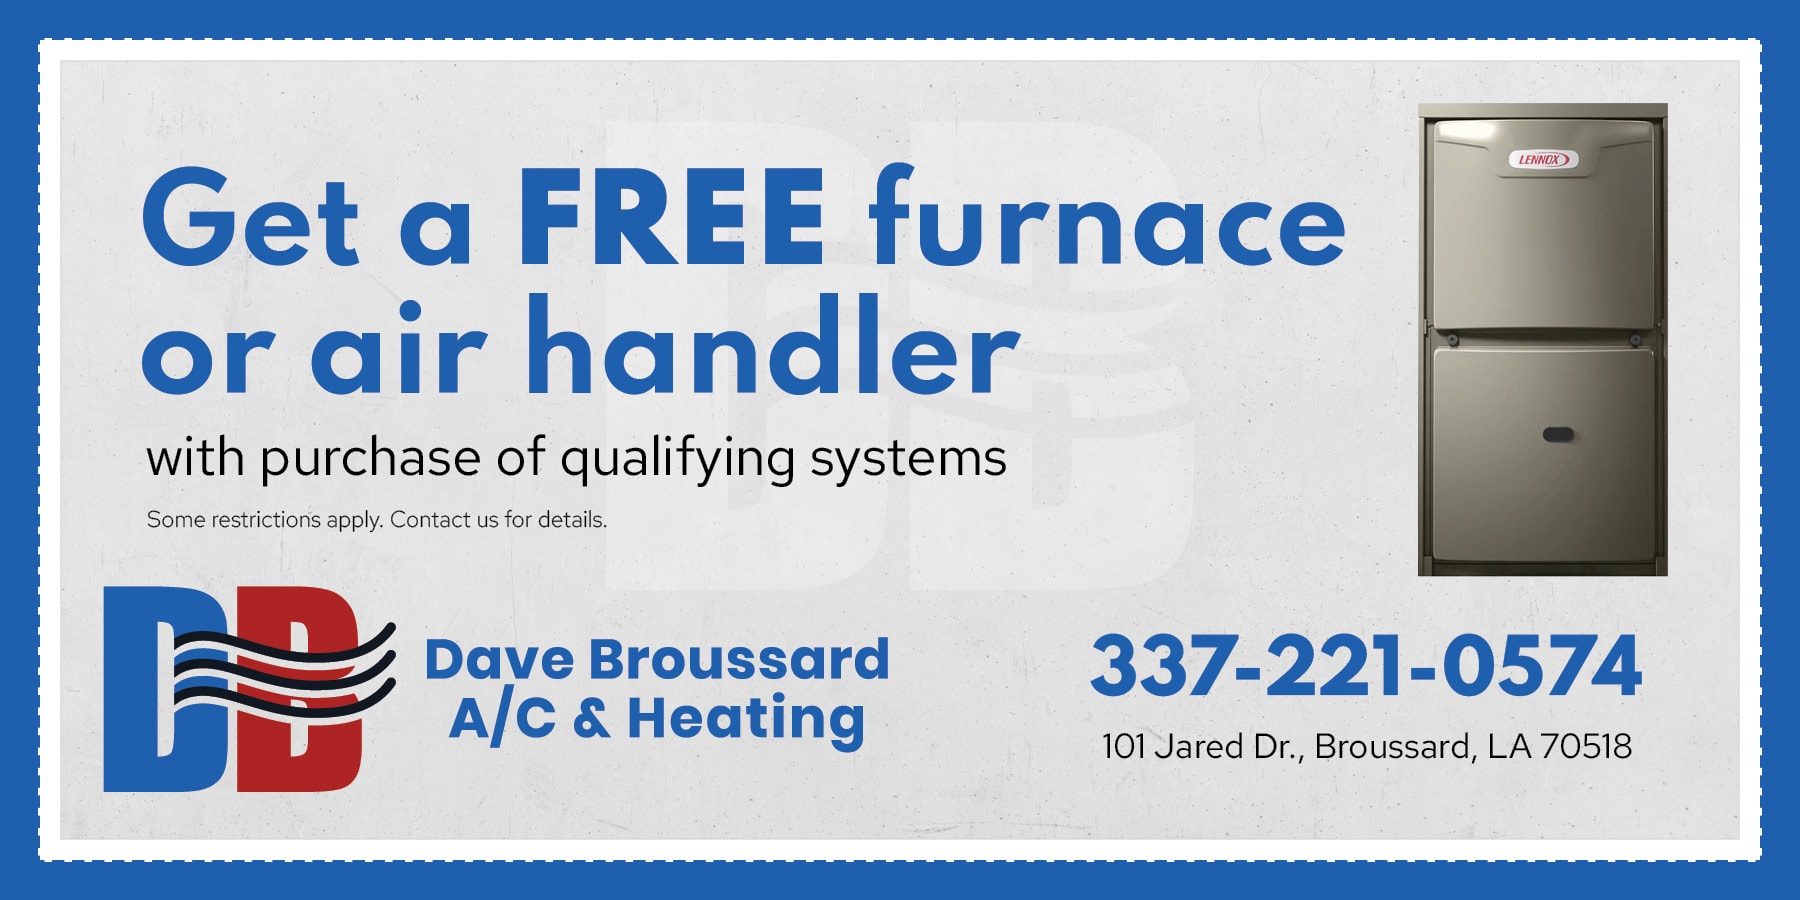 Get a FREE furnace or air handler, Dave Broussard A/C & Heating